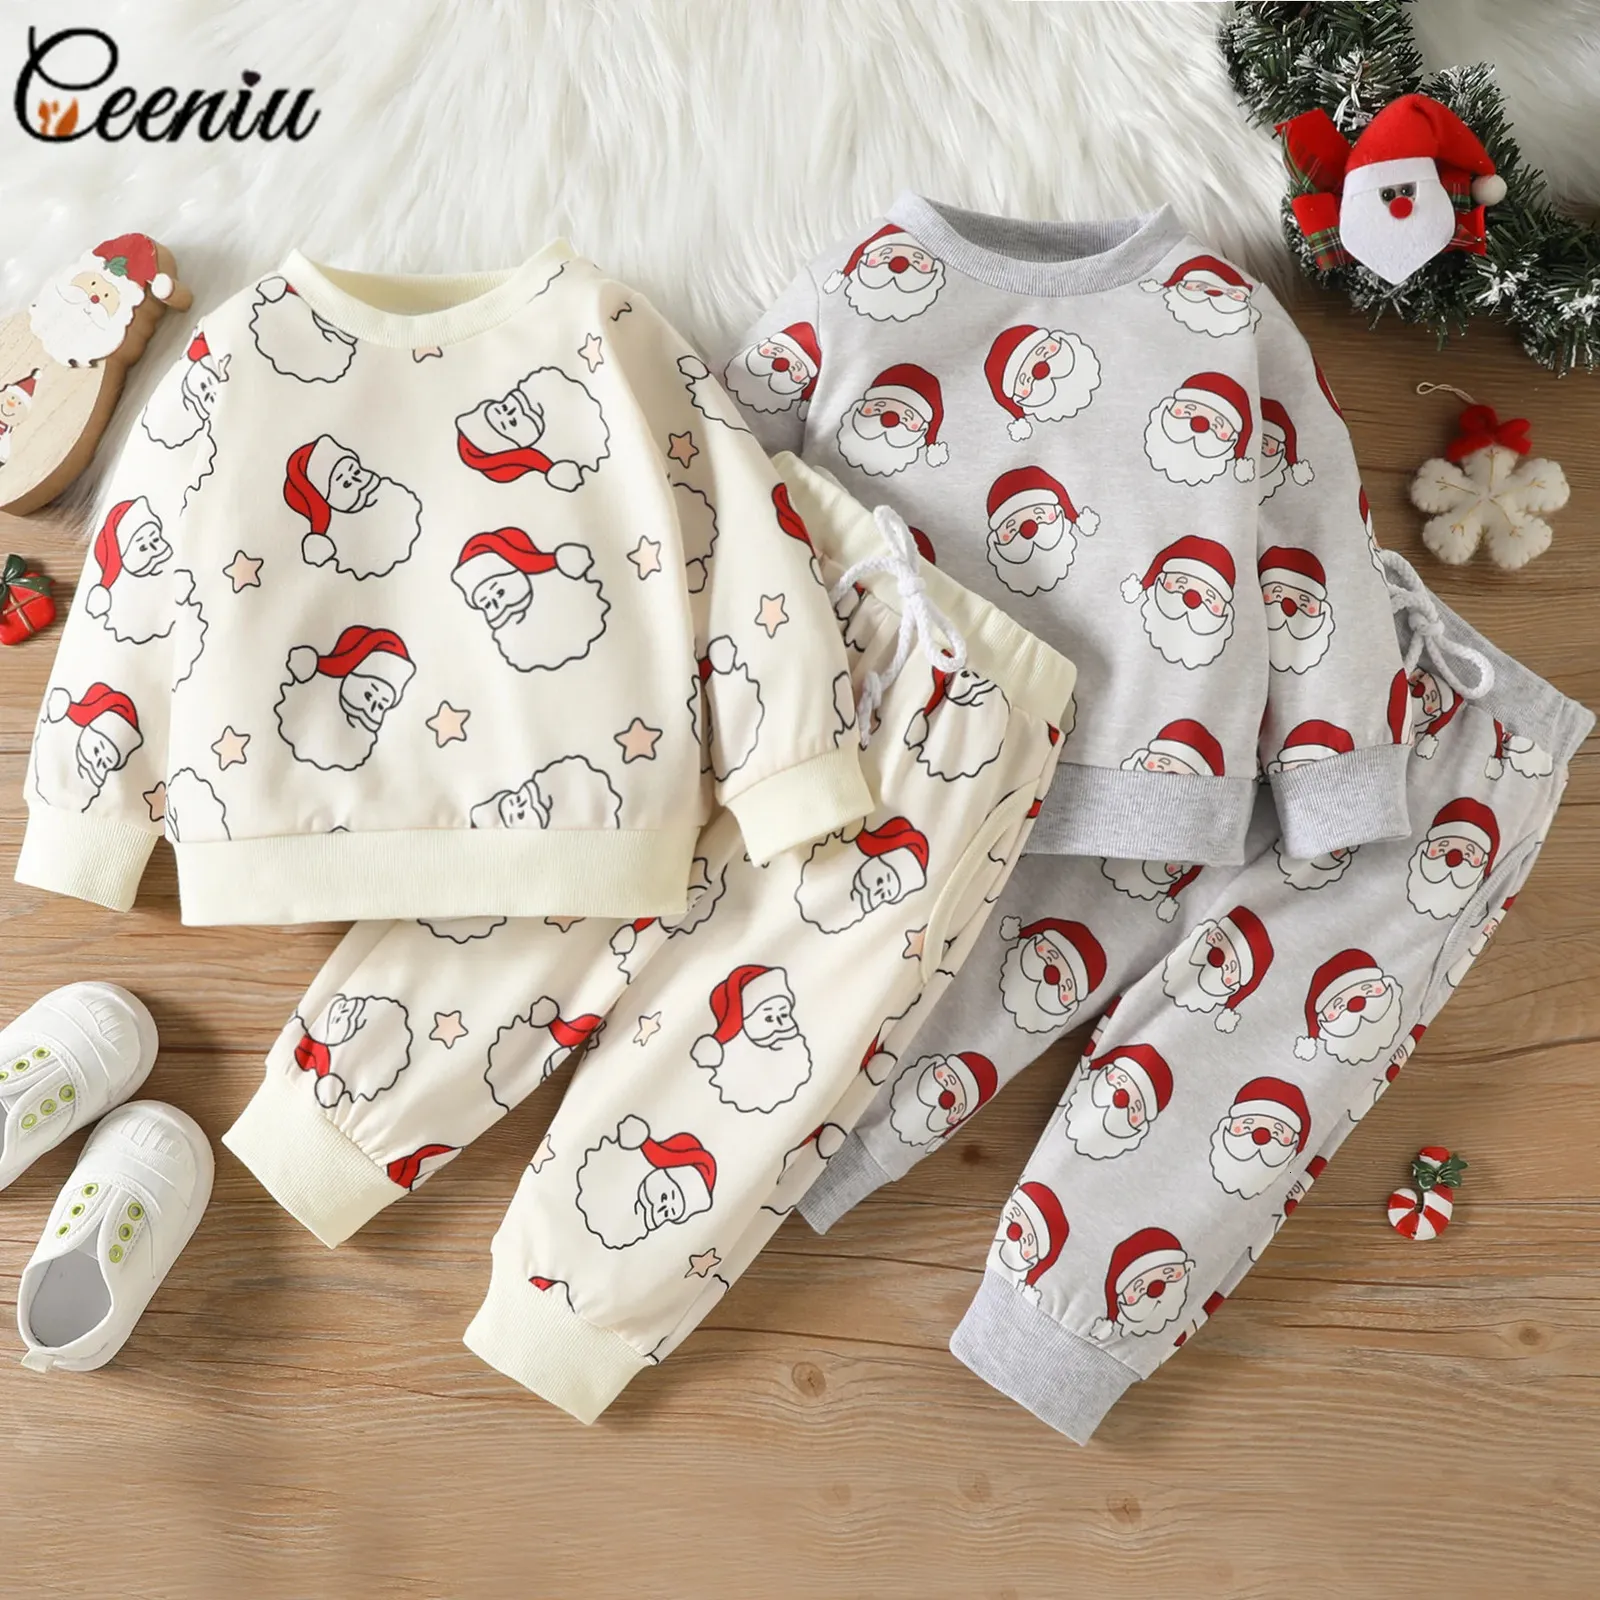 Clothing Sets Ceeniu Baby Christmas Clothes Outfit Sets Boys Girls Santa Claus Sweatshirts and Pants Pajamas Set For borns Year Costume 231120